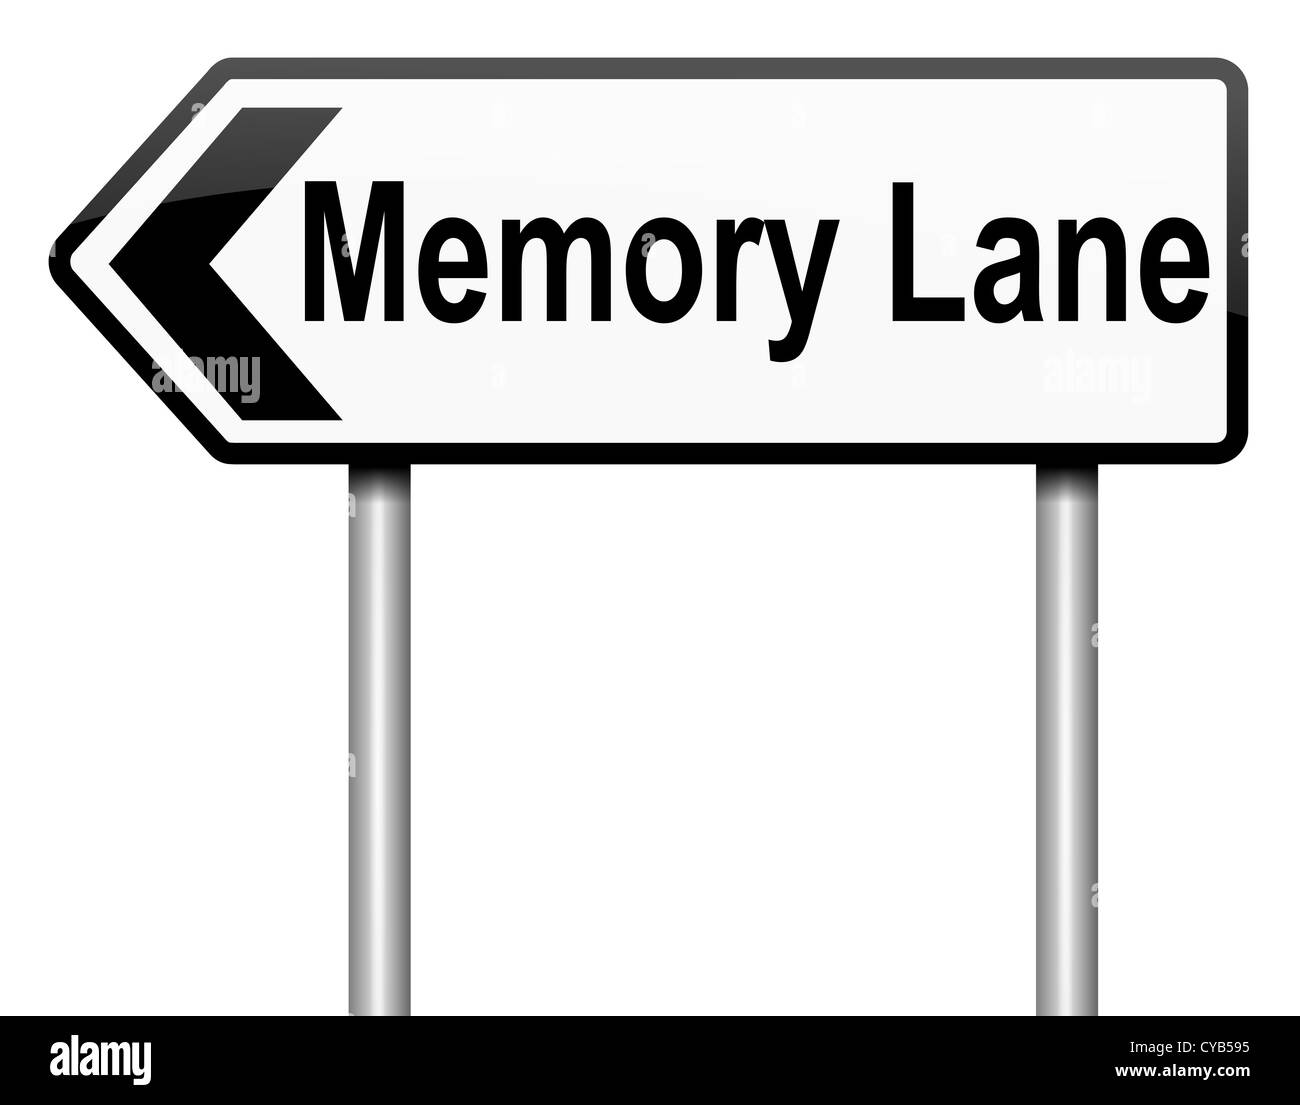 Memory Lane. Stockfoto